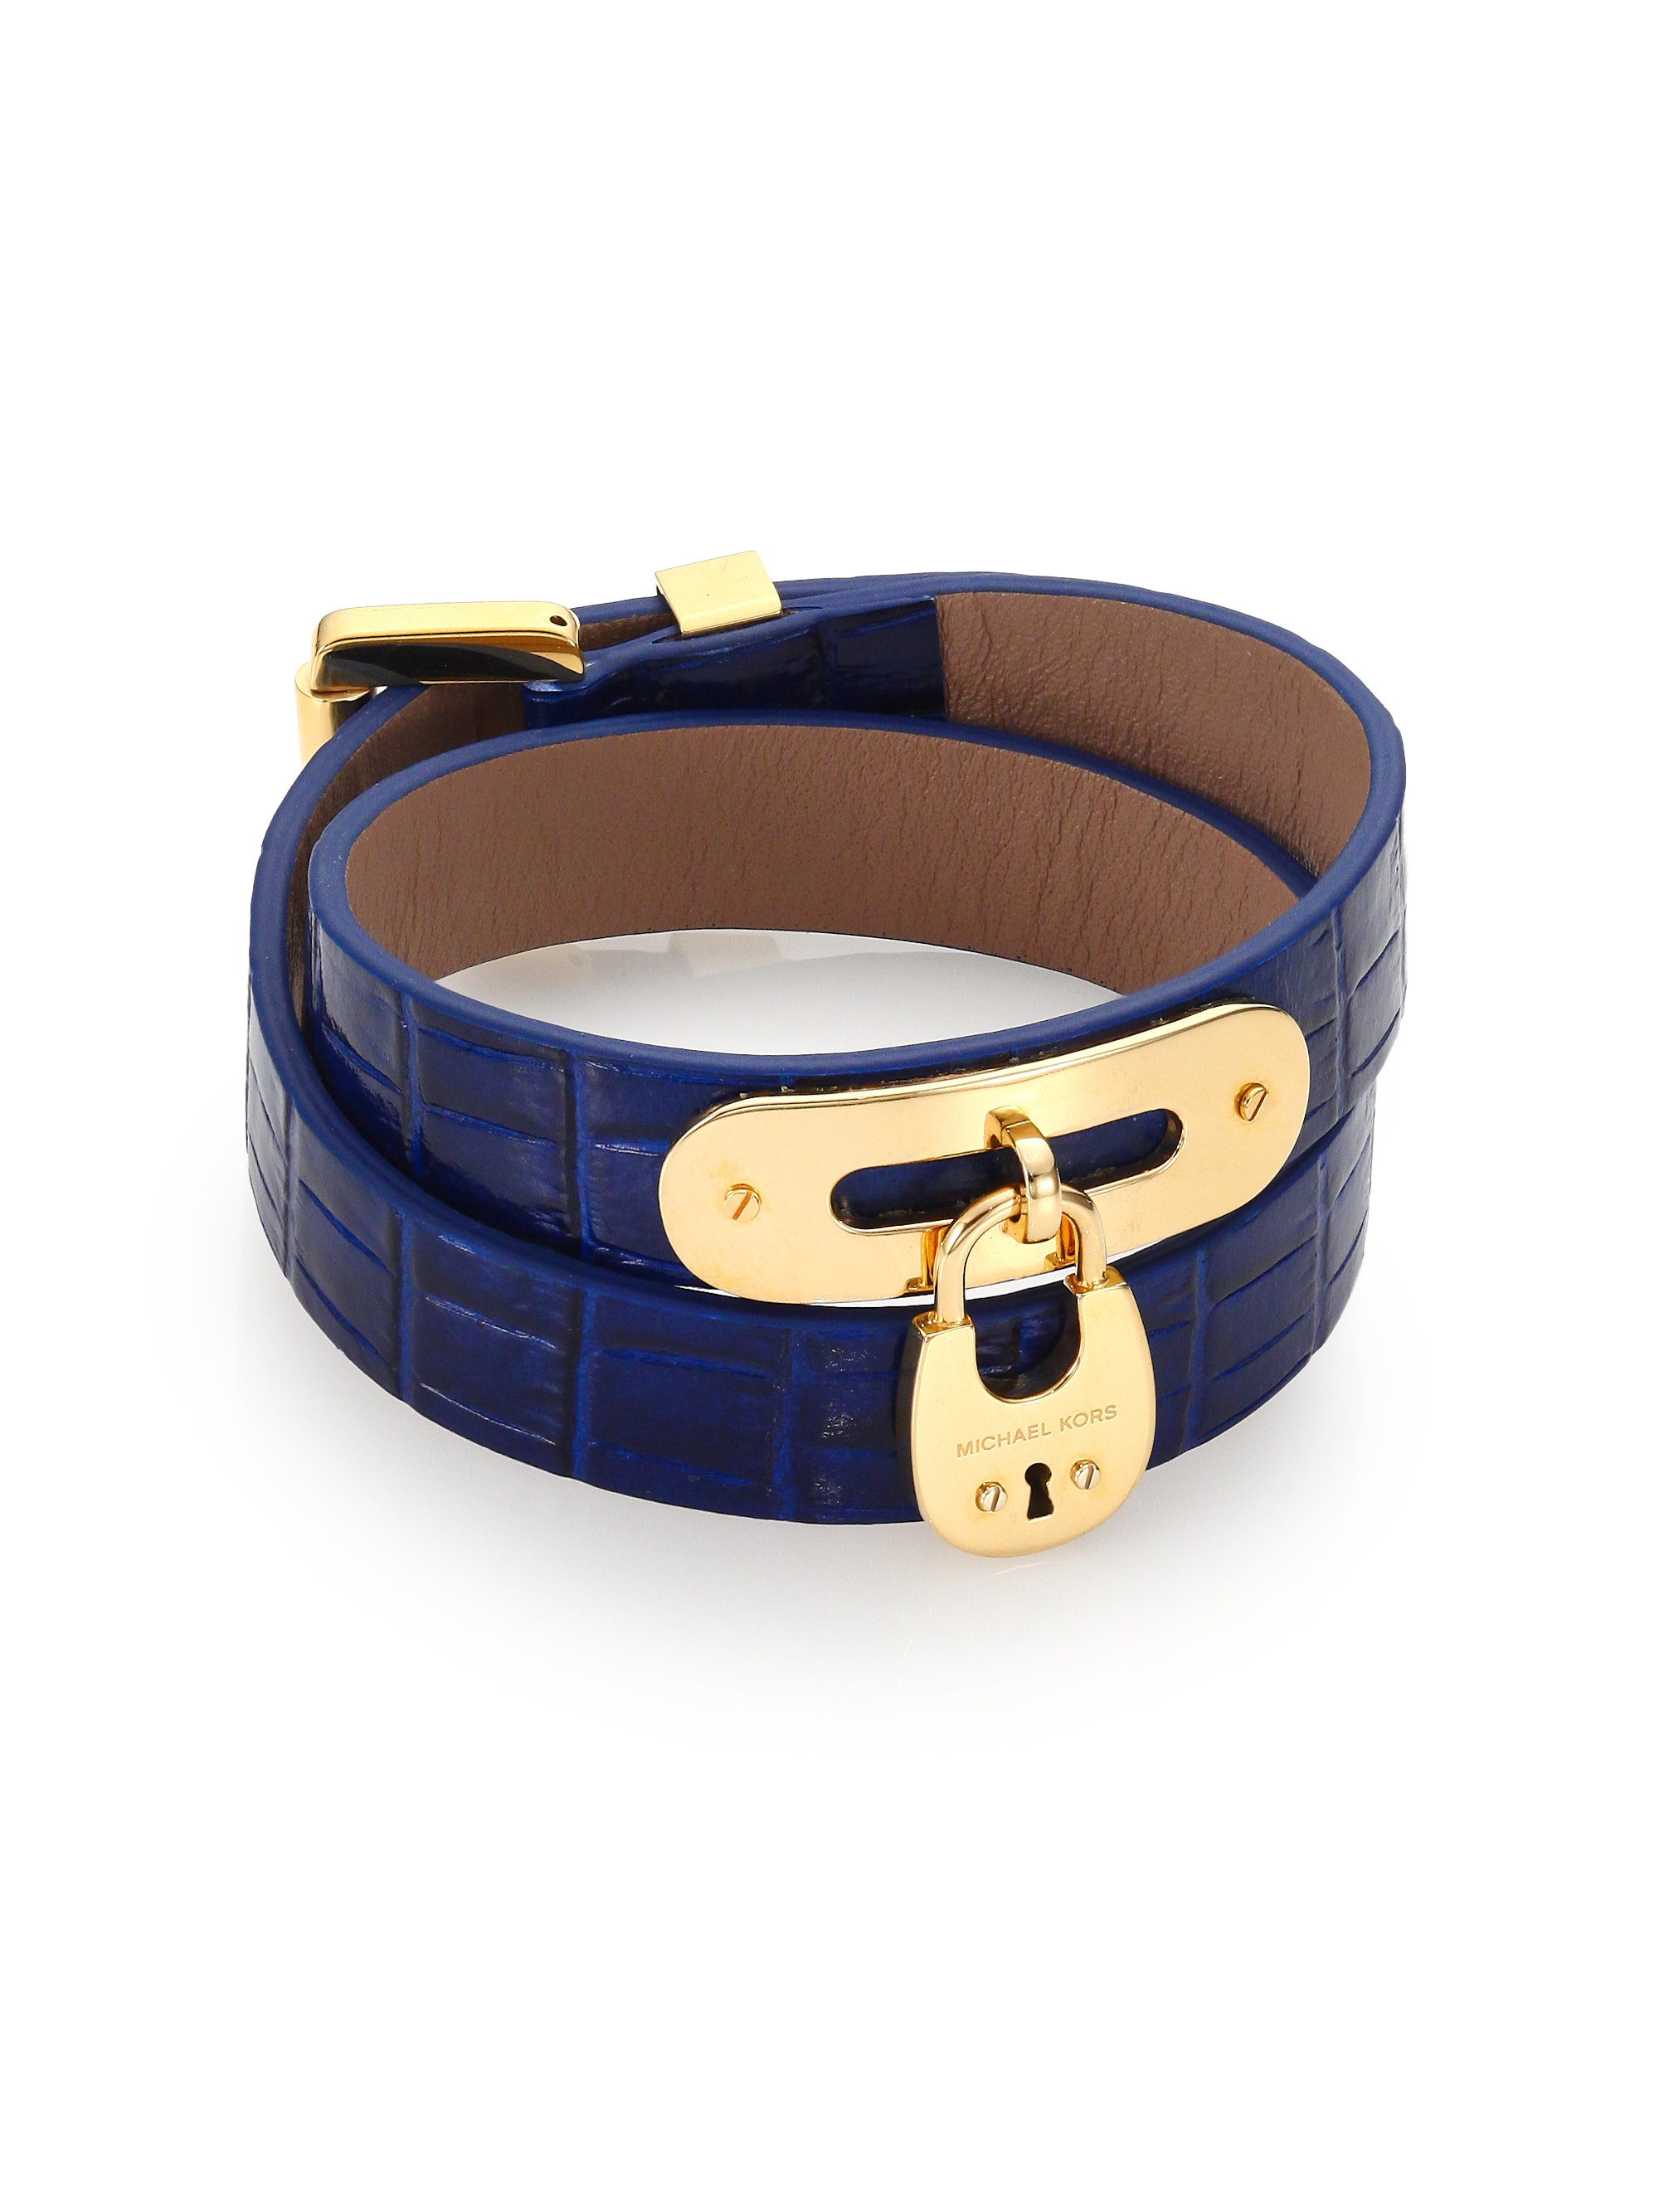 Michael Kors Leather Stainless Steel Fashion Bracelets for sale  eBay